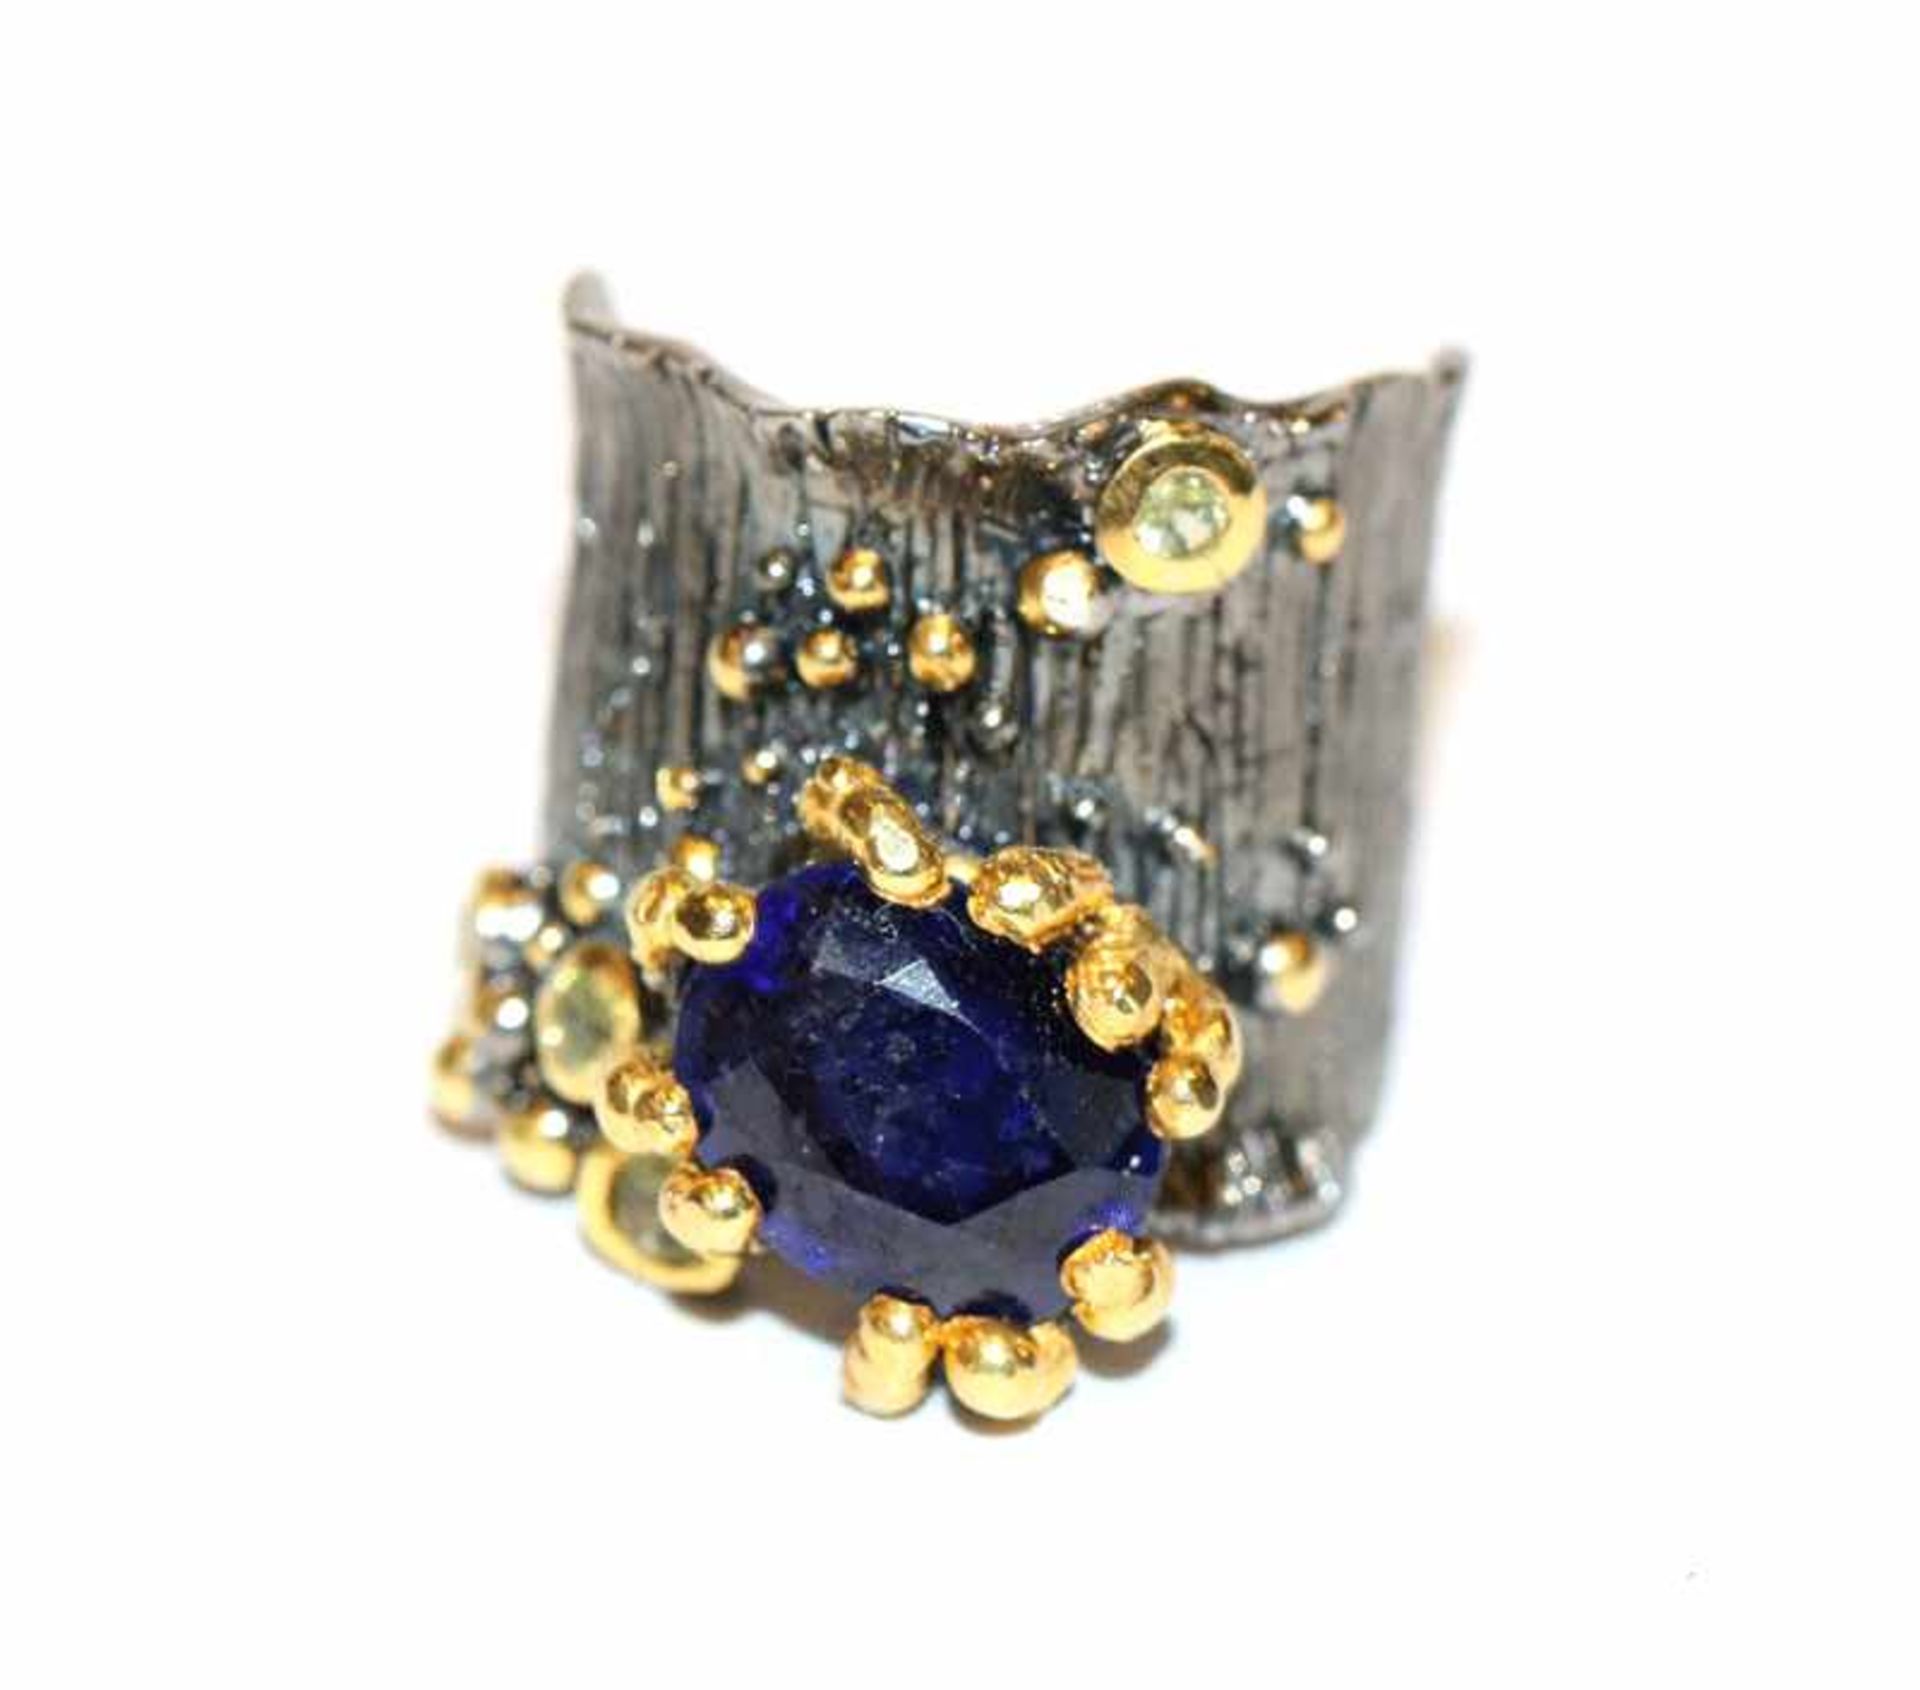 Sterlingsilber Designer Ring, teils vergoldet mit Safir, geprüft, Gr. 53, ausgefallene Handarbeit